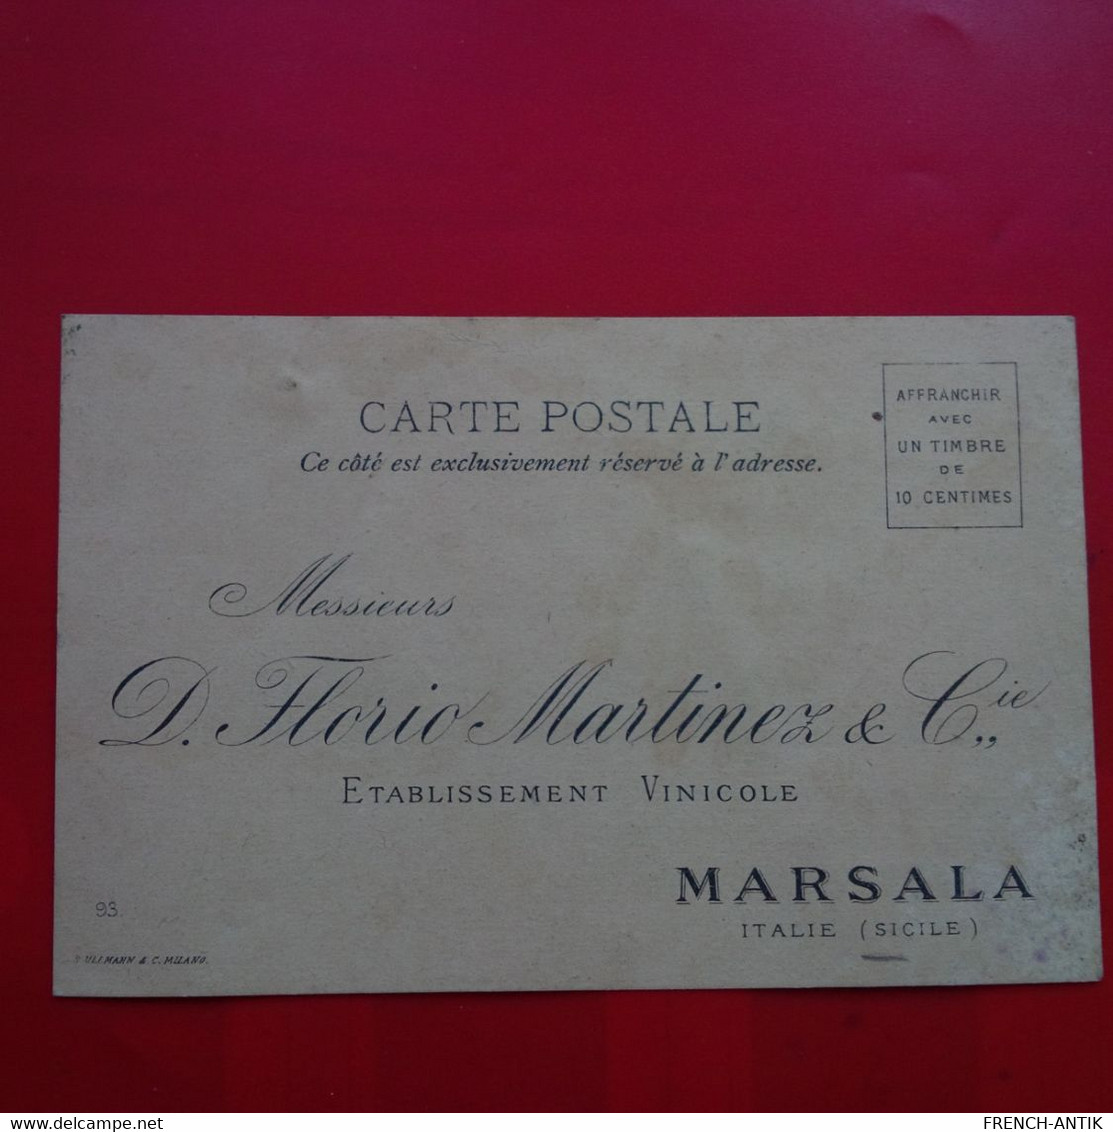 MARSALA SICILE ETABLISSEMENT VINICOLE FLORIO MARTINEZ 1893 - Marsala